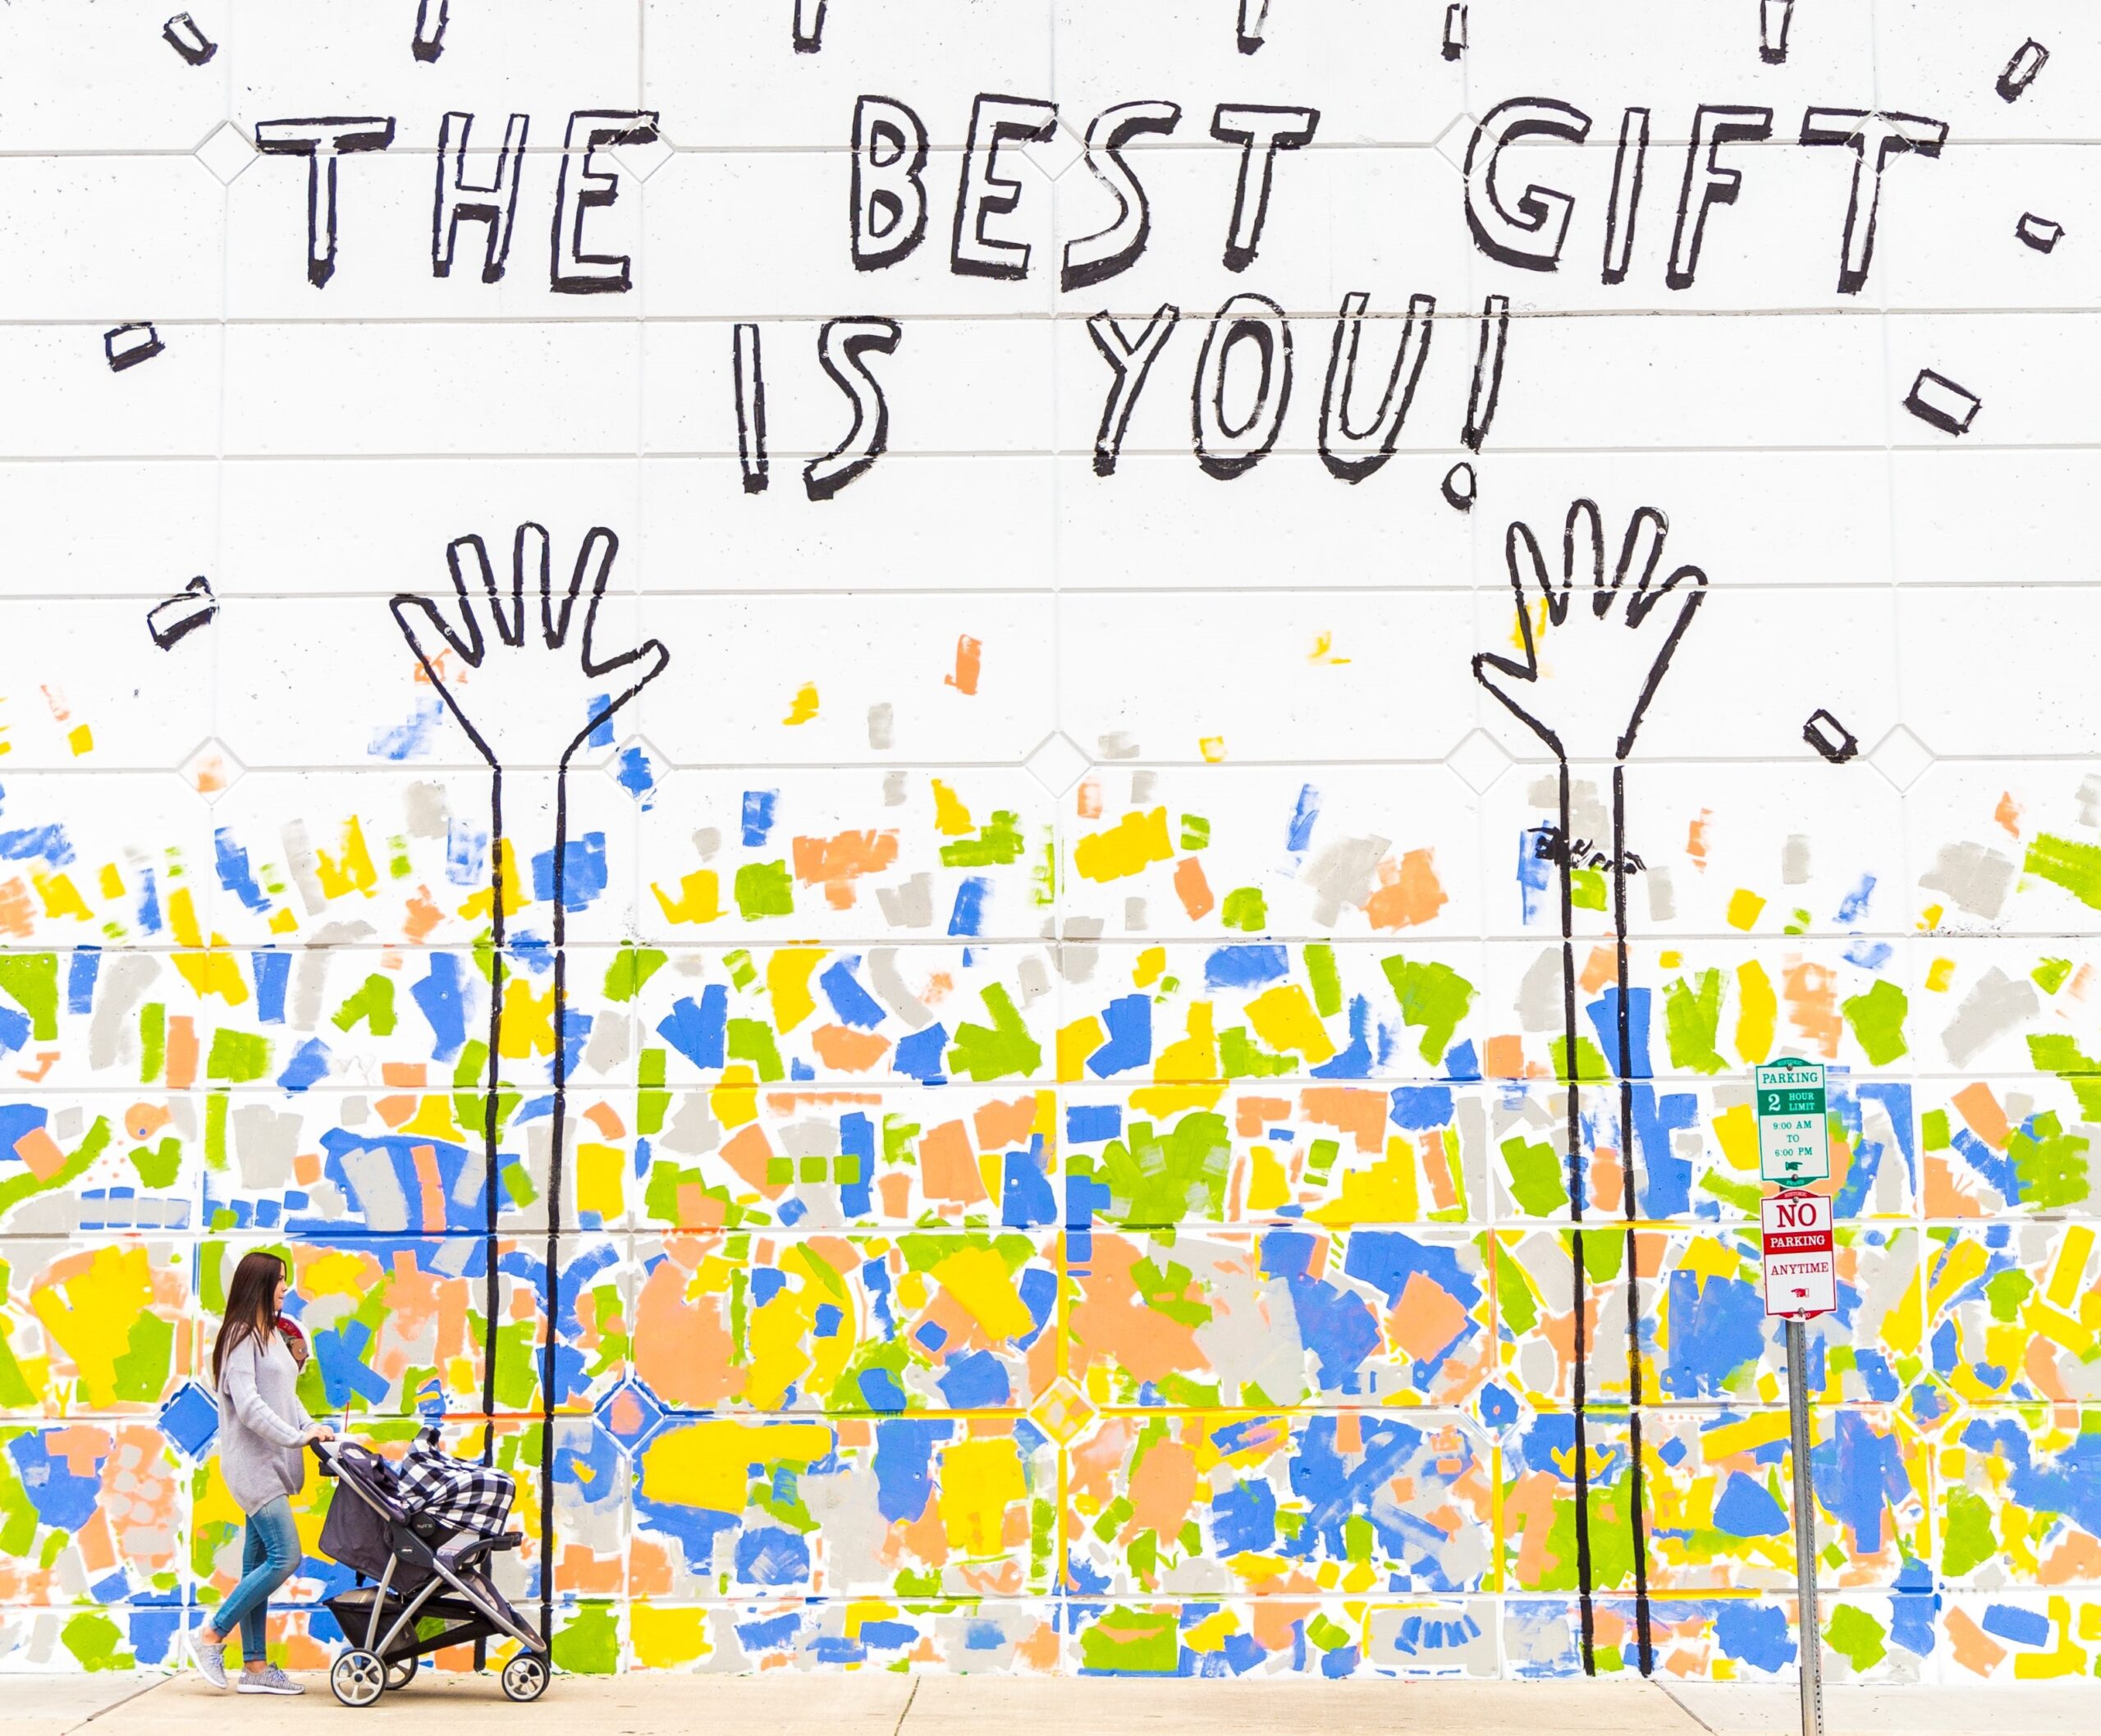 het mooiste cadeau ben jij, the best gift is you!